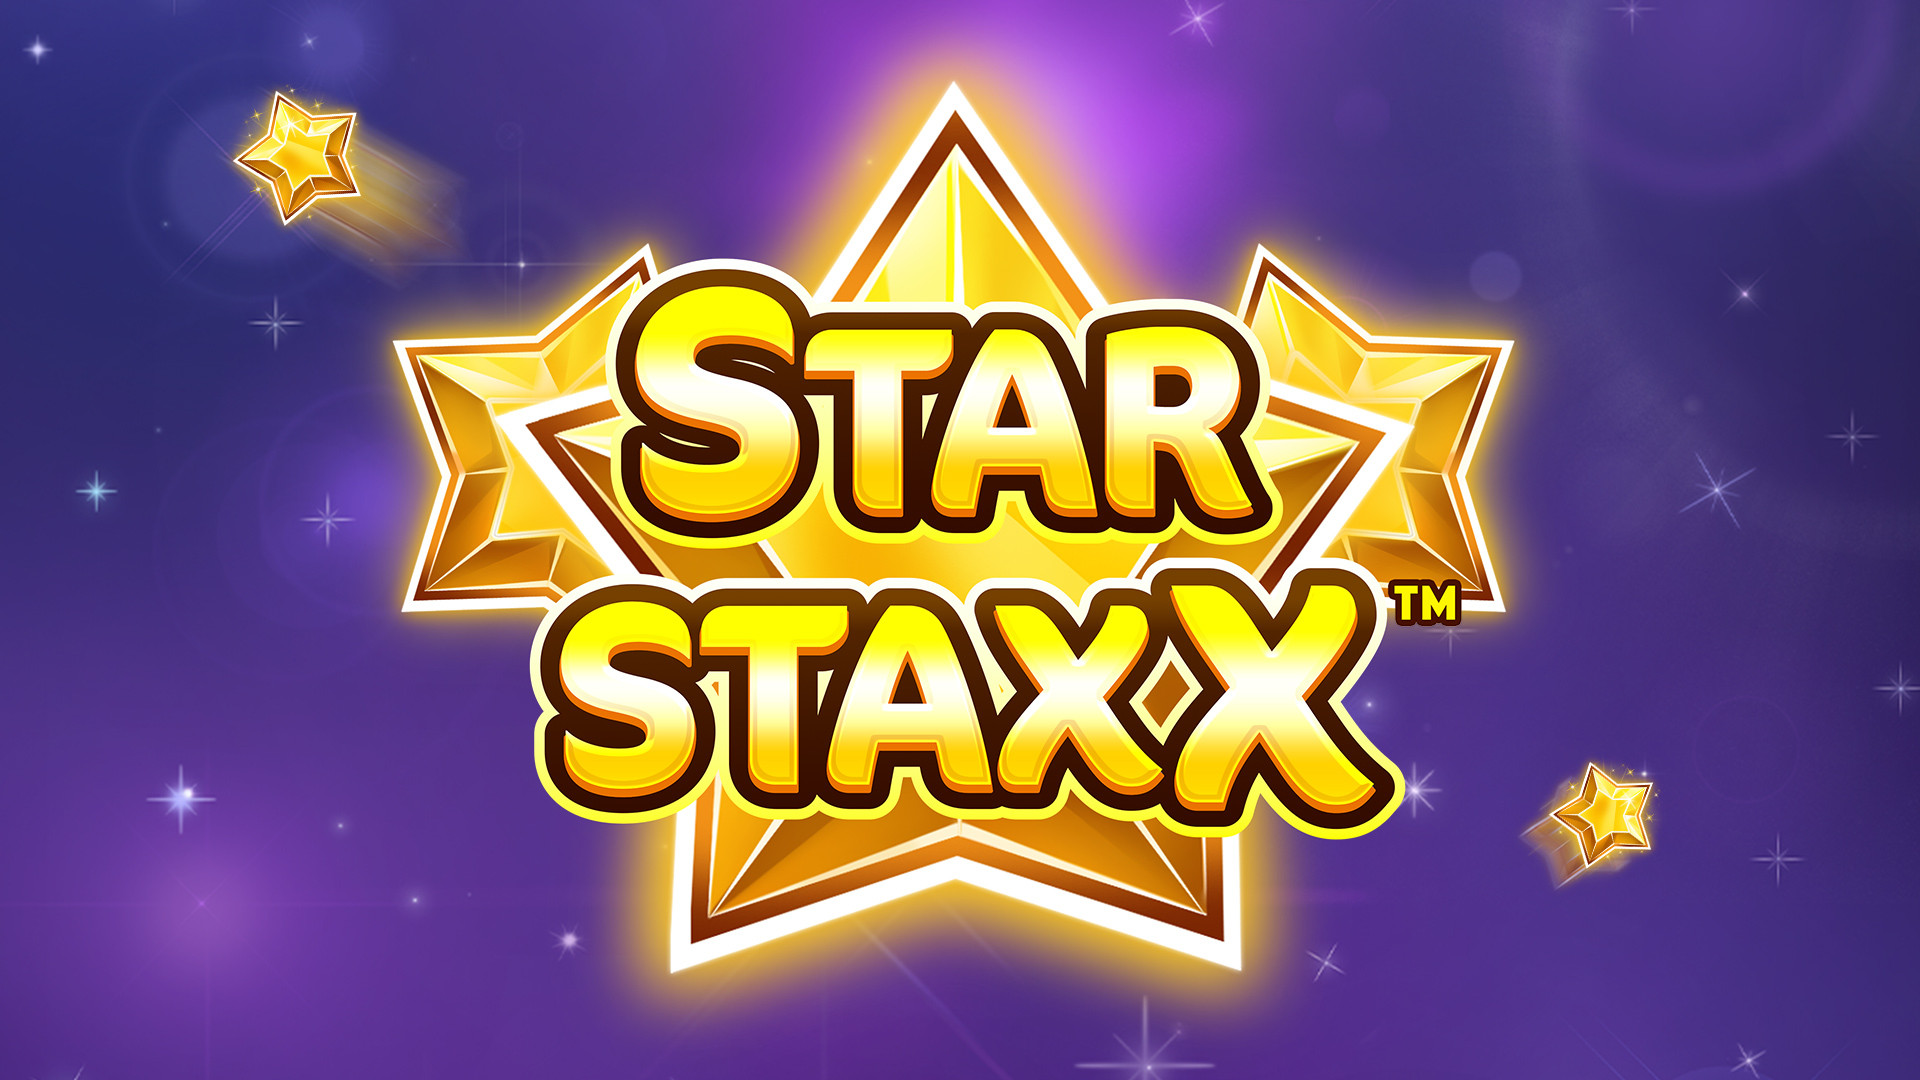 Star Staxx